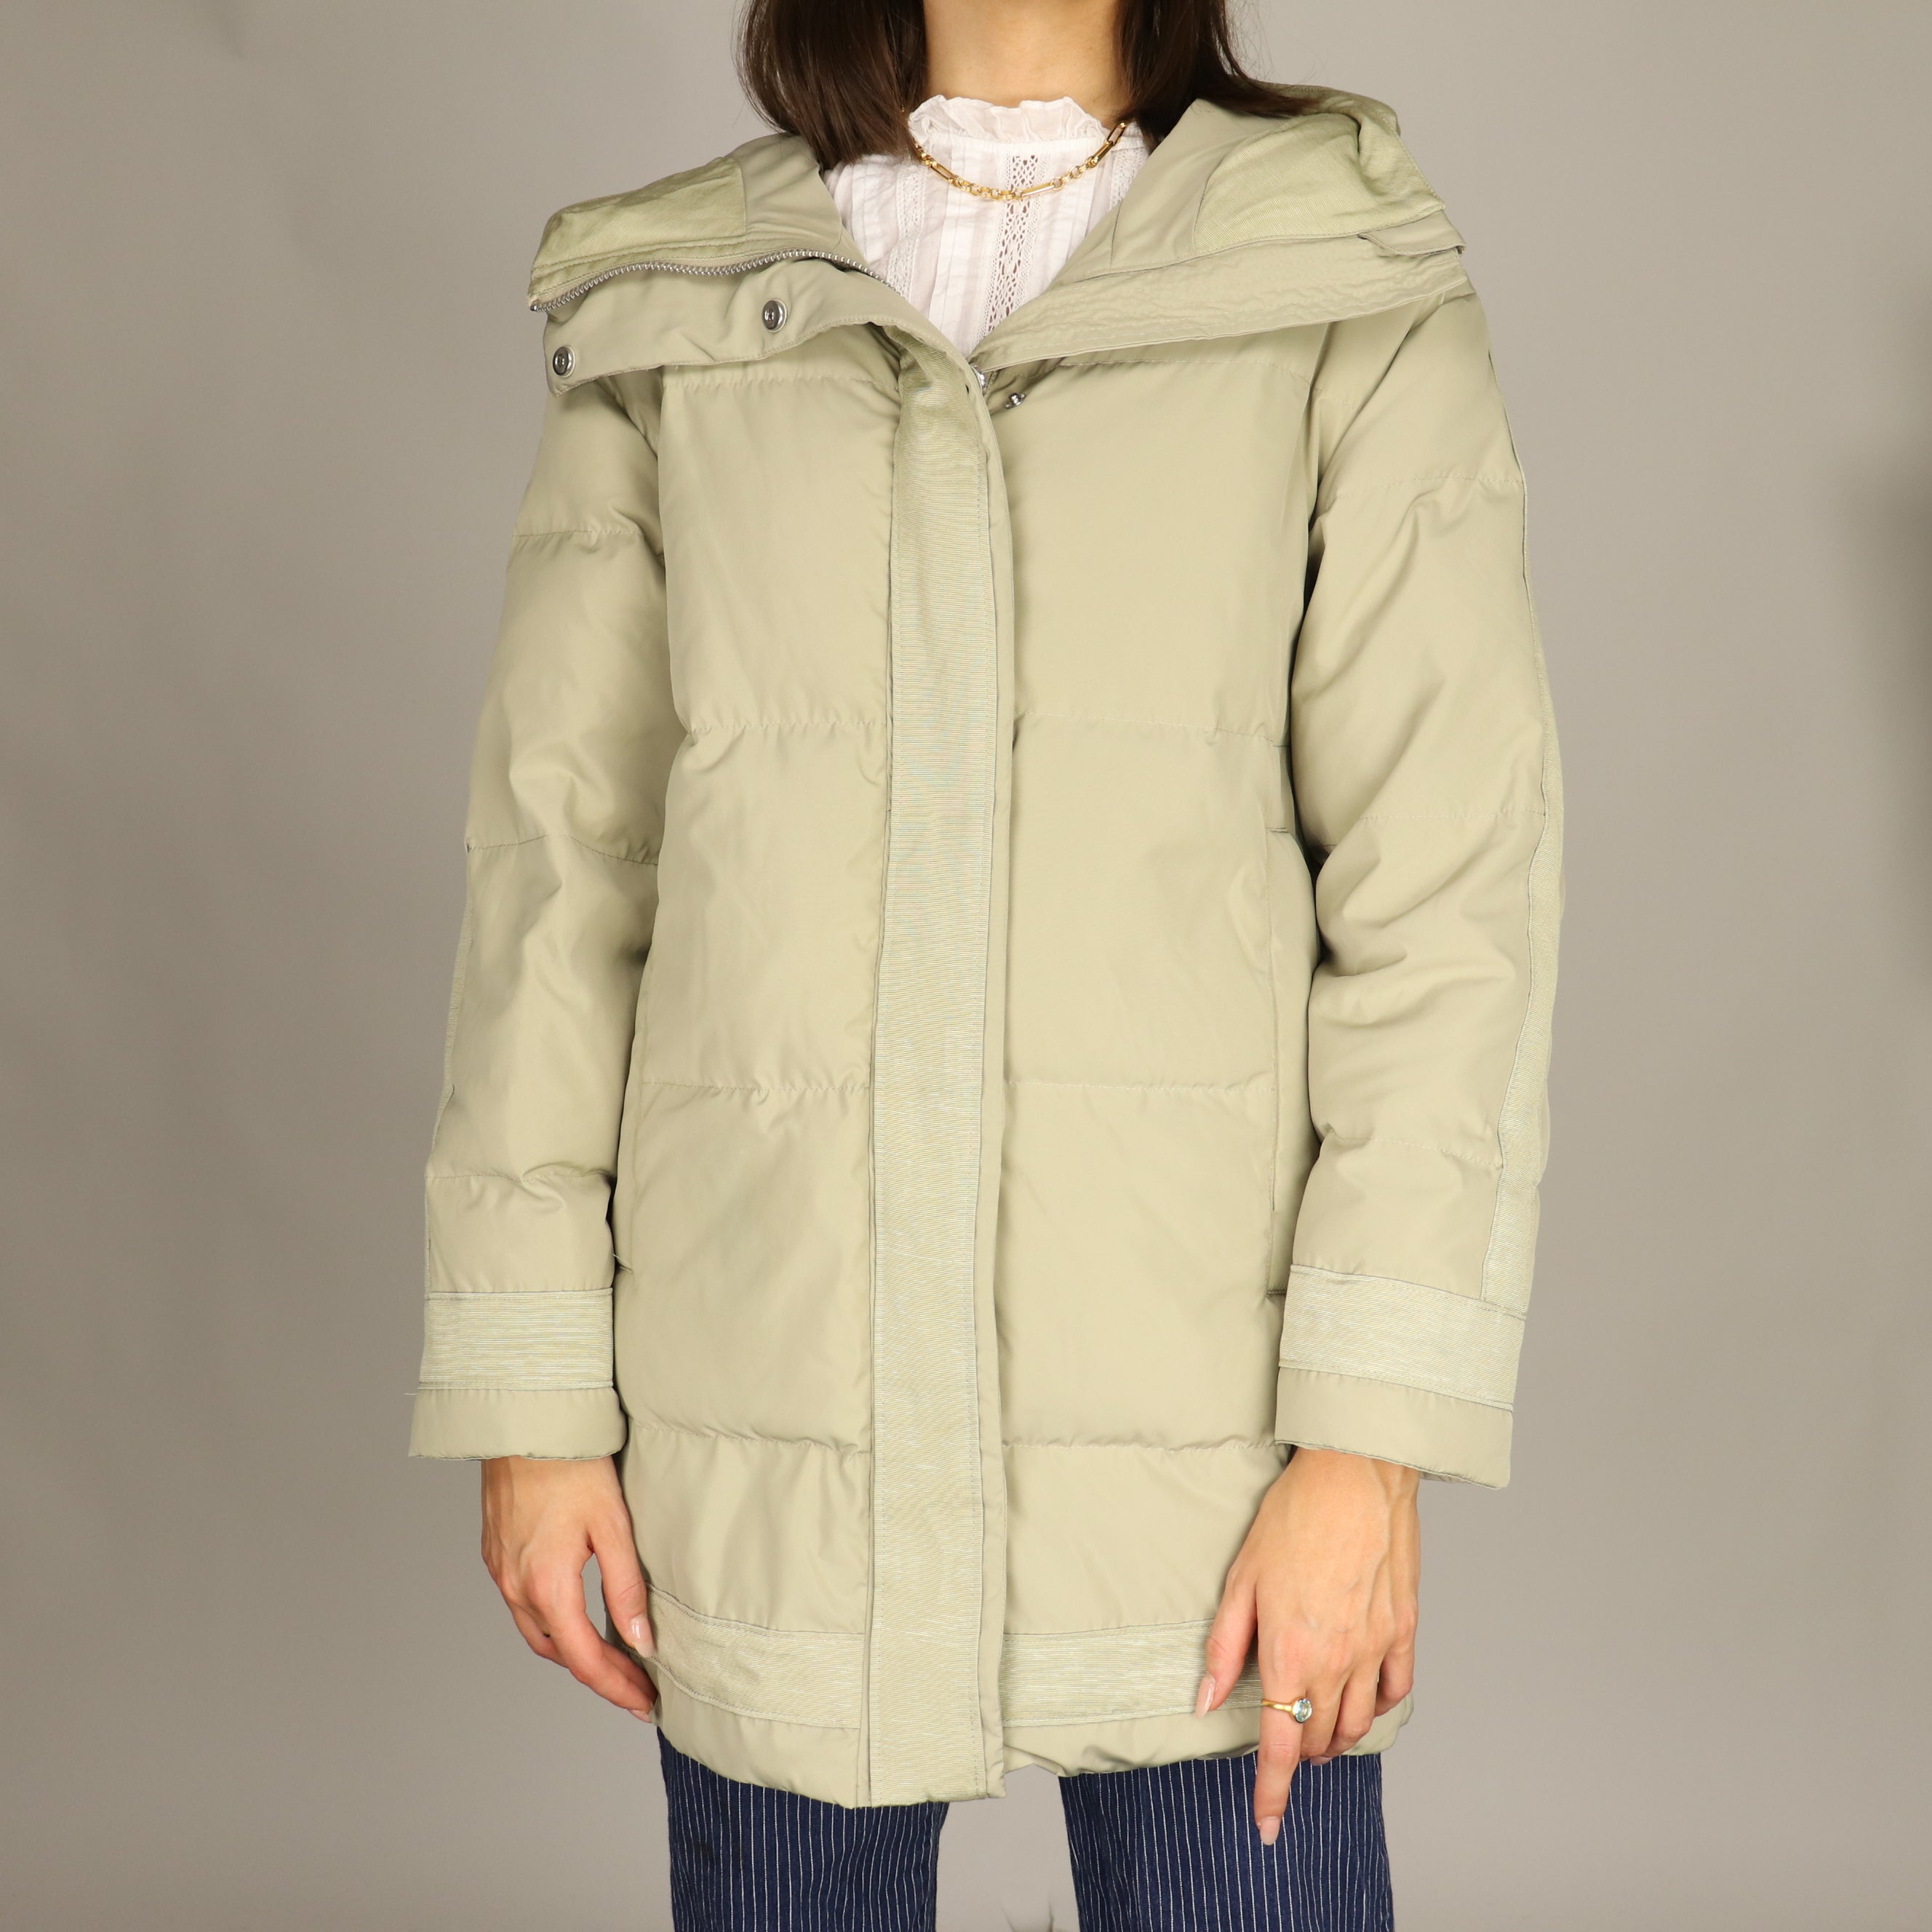 Coat, Size 10